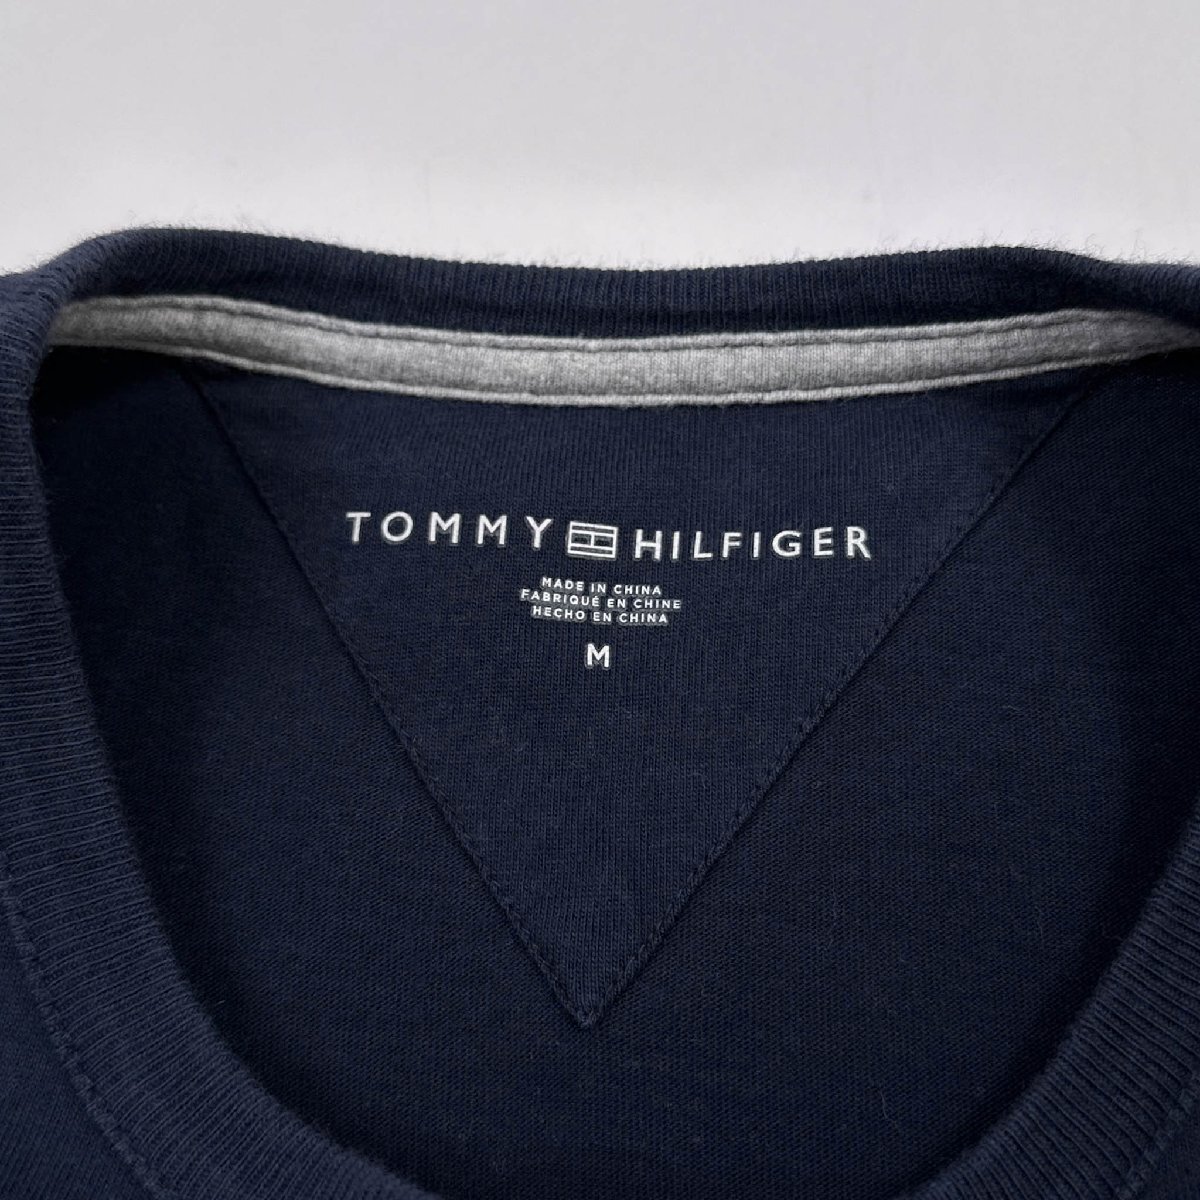 TOMMY HILFIGER トミーヒルフィガー フラッグ ロゴ デザイン 半袖Tシャツ カットソー M/ネイビー/メンズ_画像4